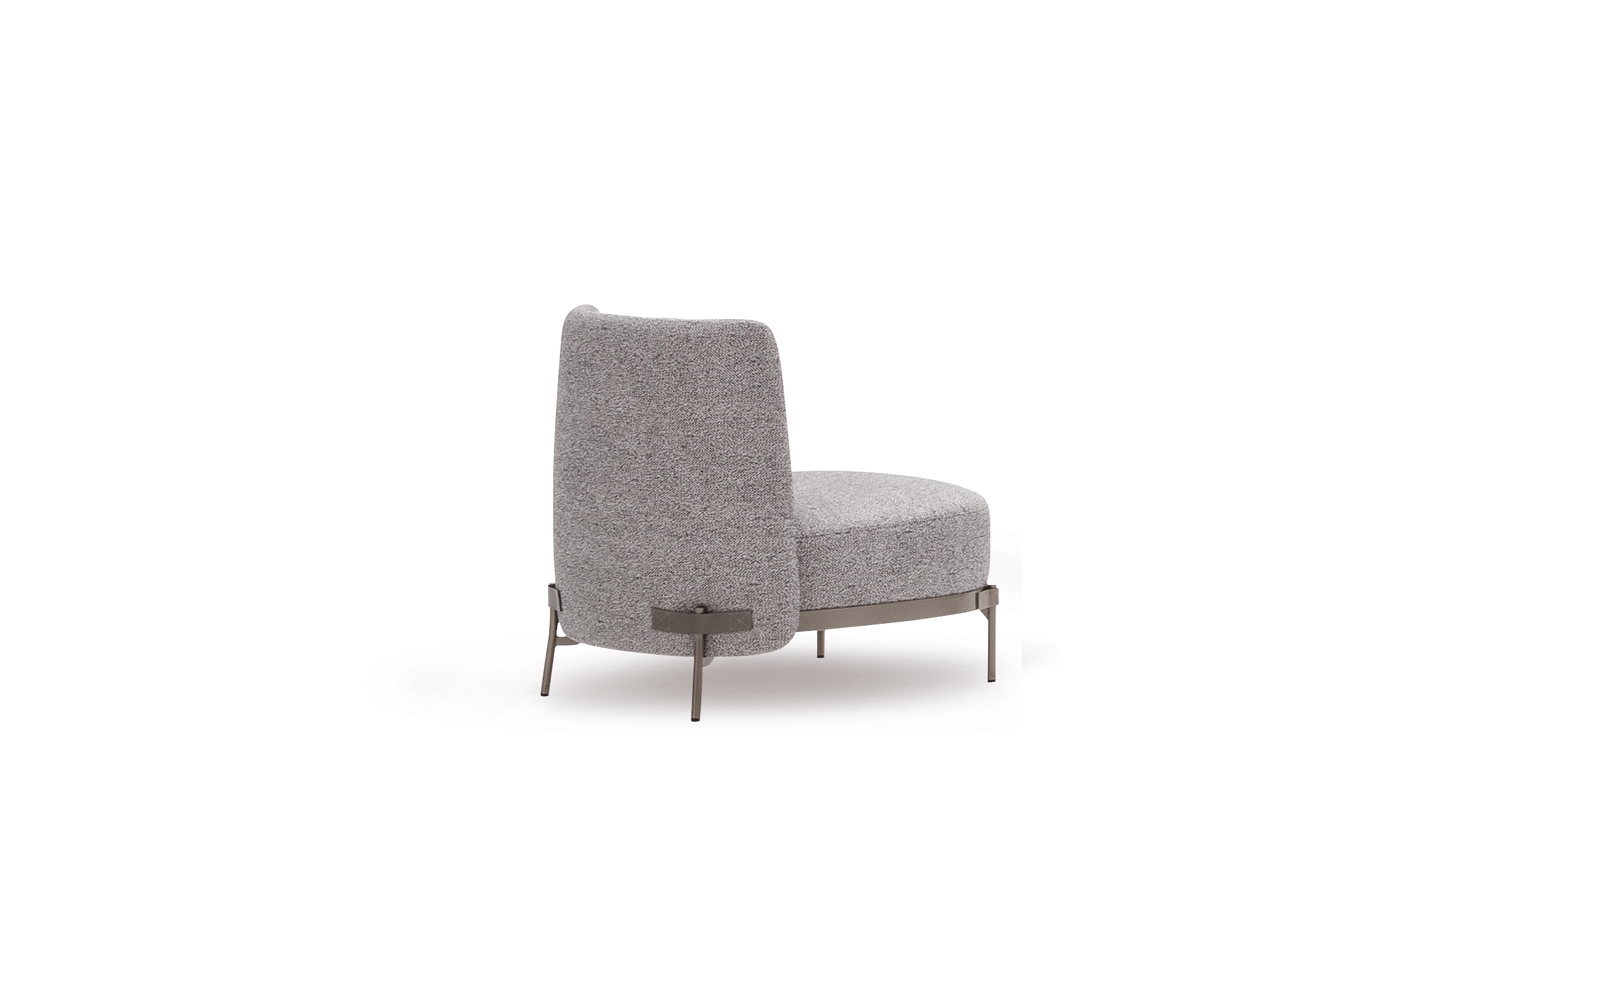 EKar Italian Style Mordern Design Leisure Chair